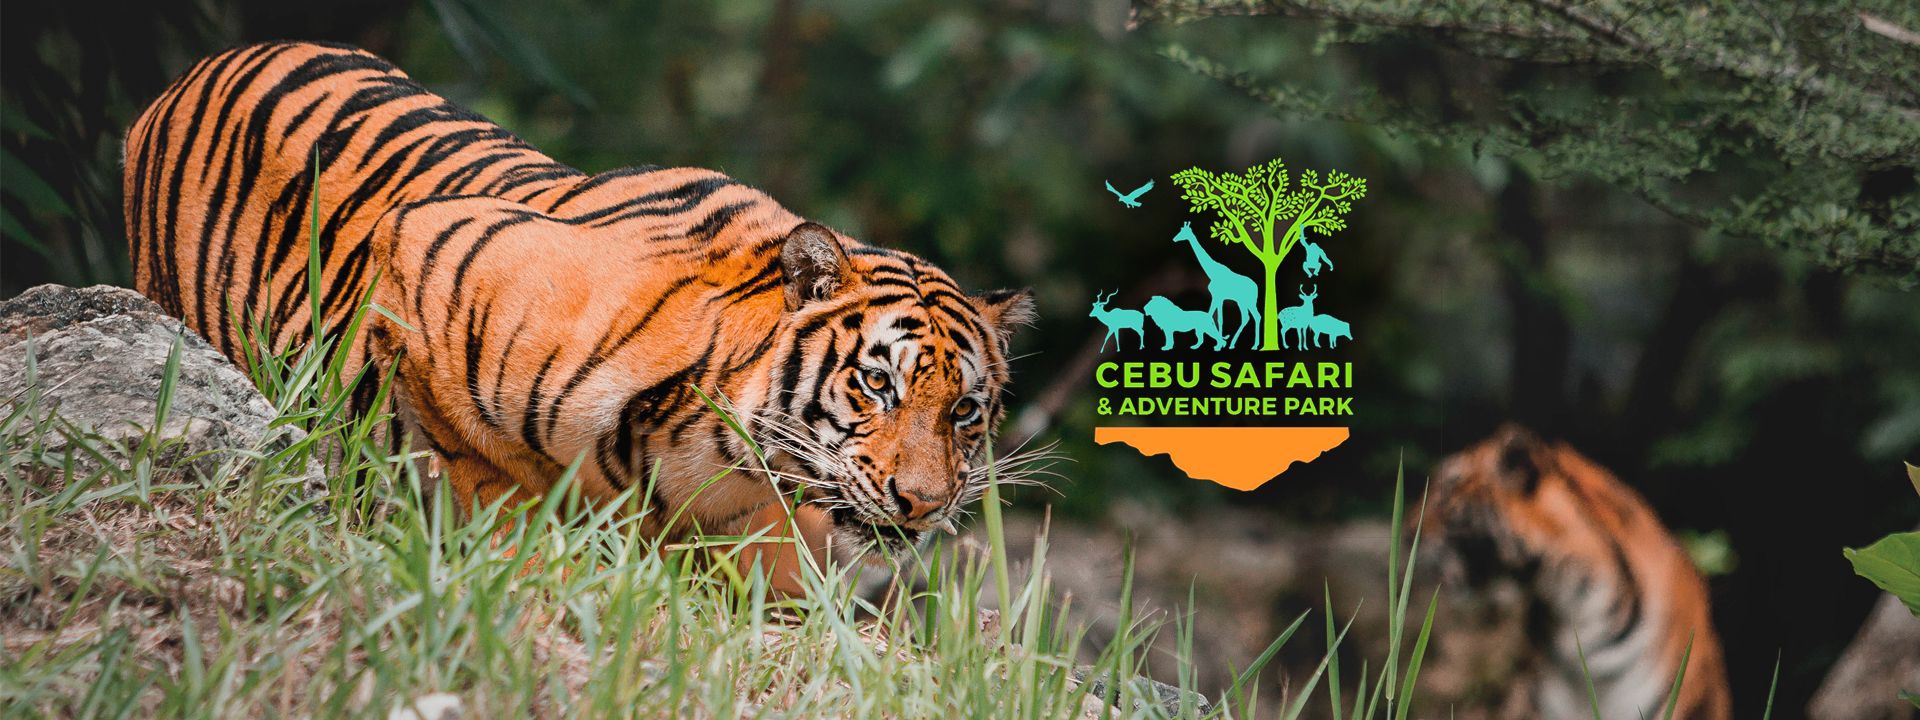 Imagen del tour: Cebu Safari and Adventure Park Ticket in Cebu